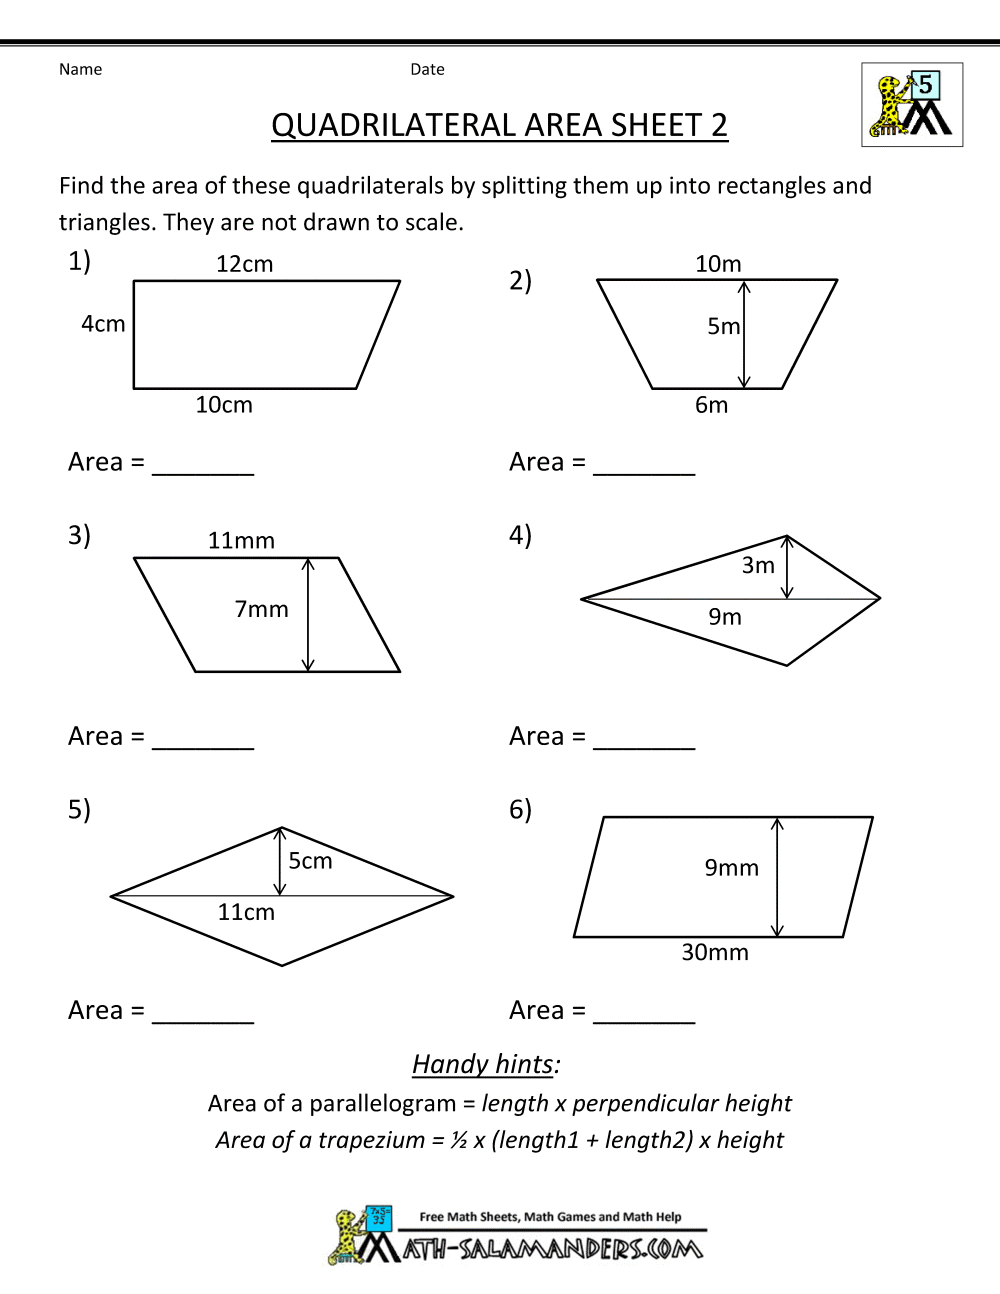 Math Practice Worksheets